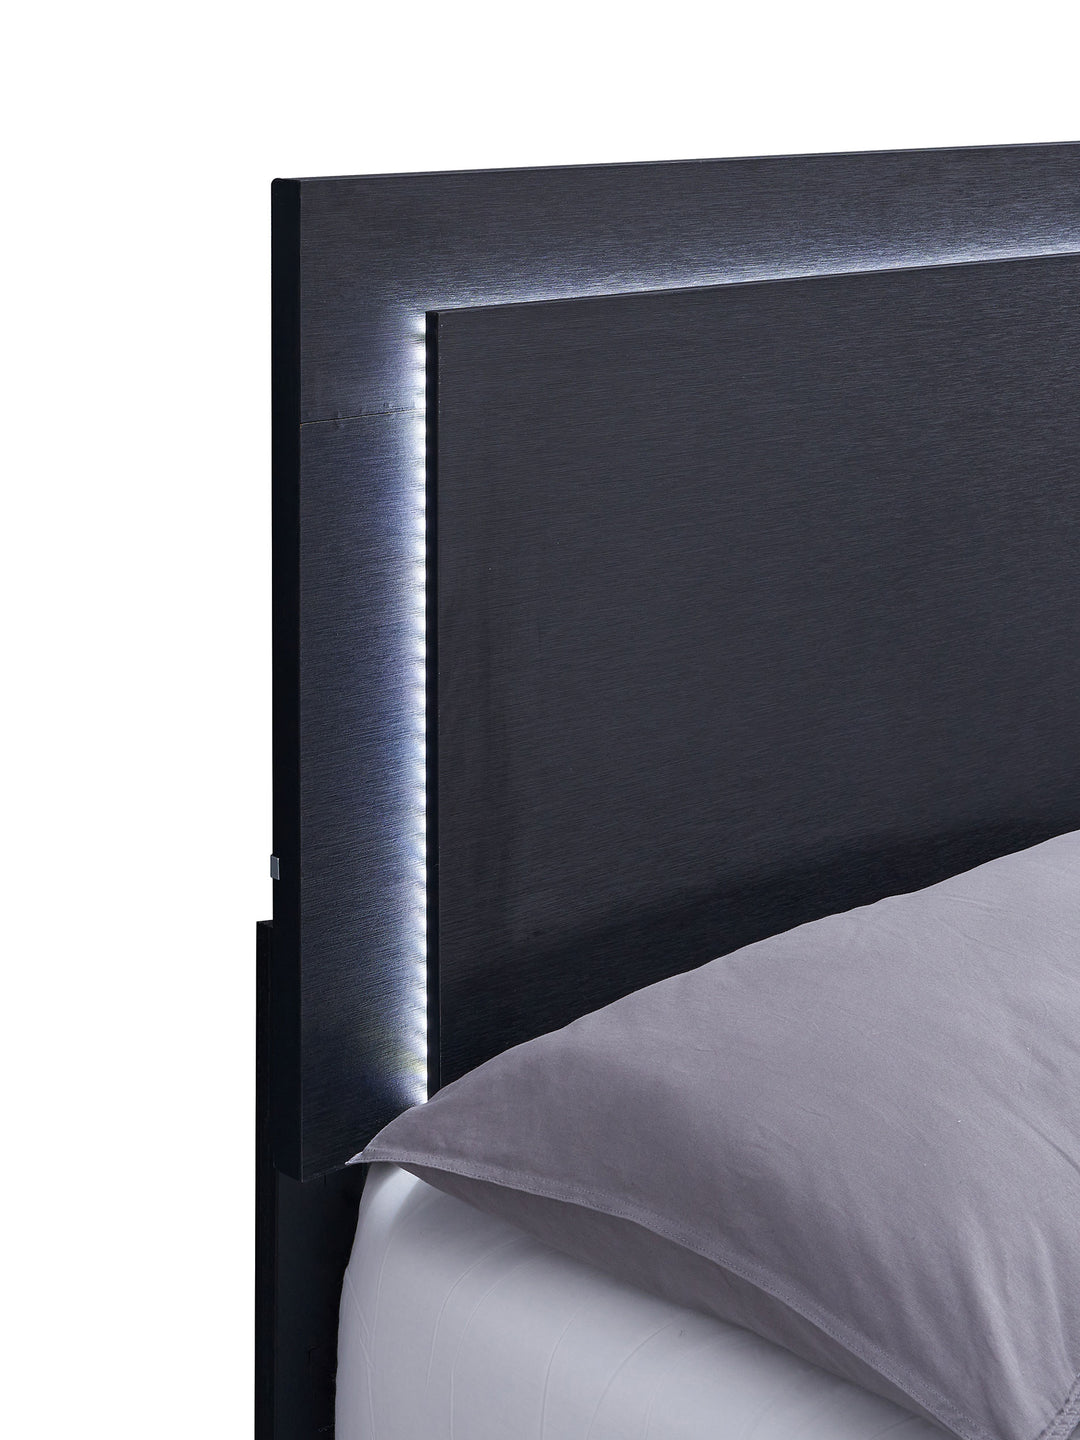 Marceline 4-piece Eastern King Bedroom Set with LED Headboard Black_11